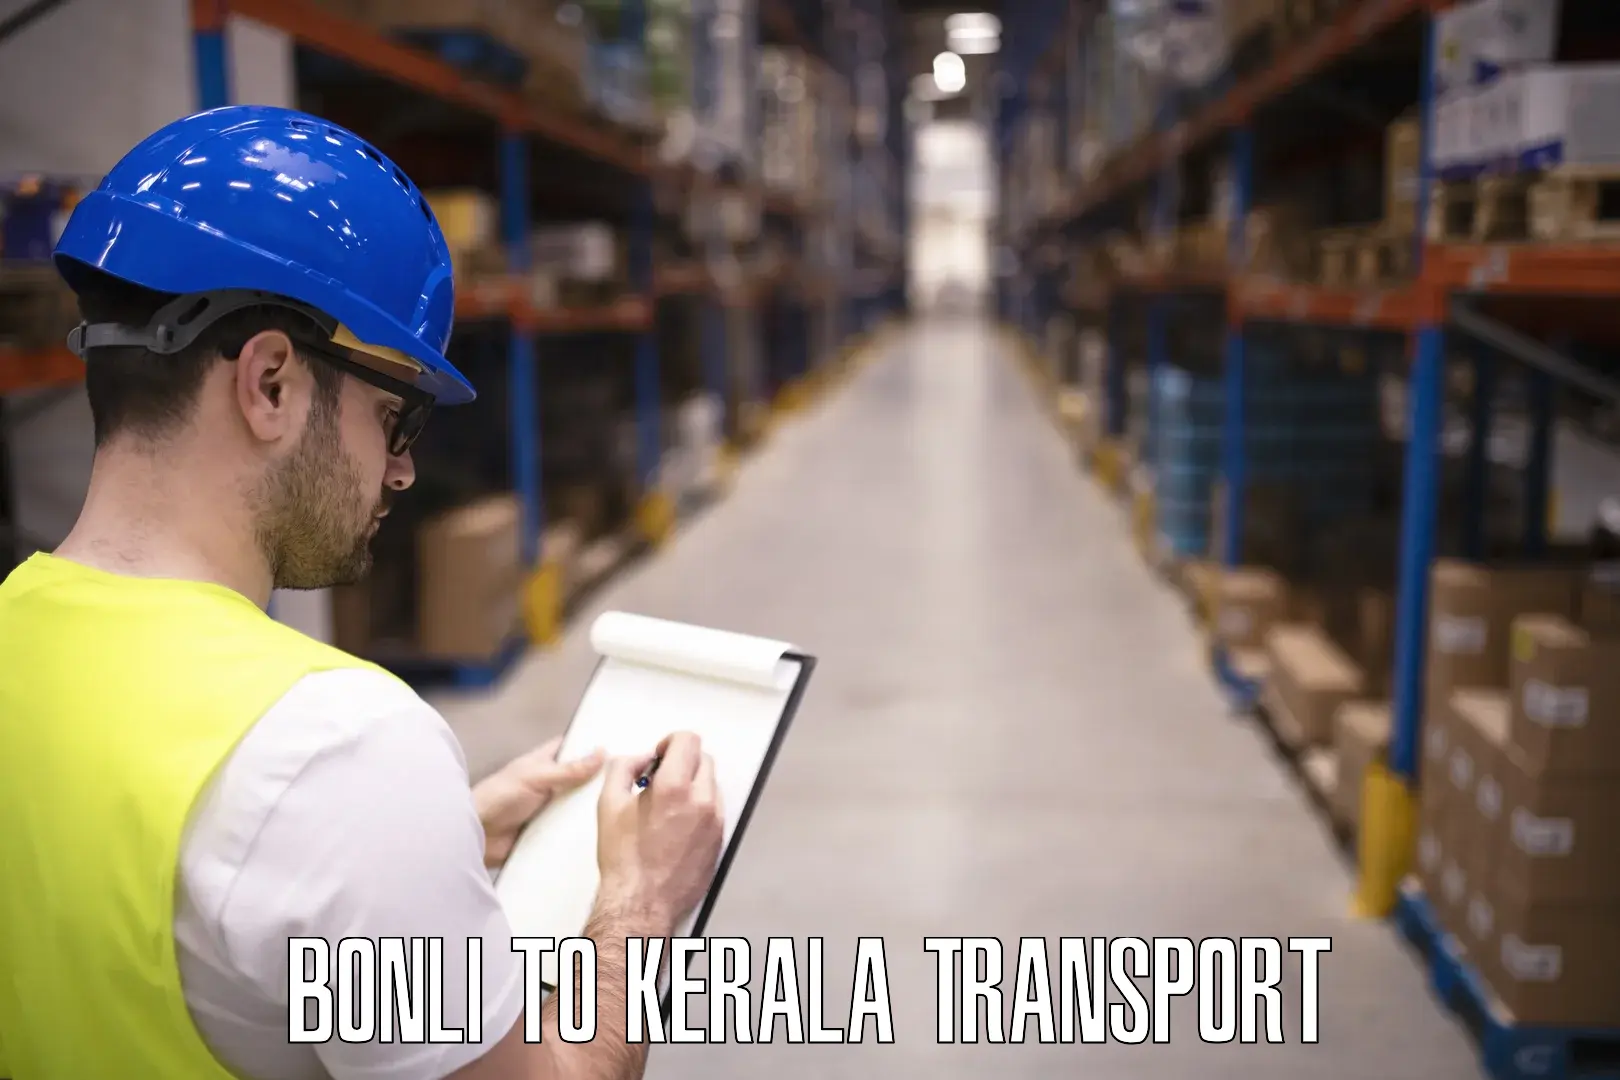 Sending bike to another city Bonli to Kerala